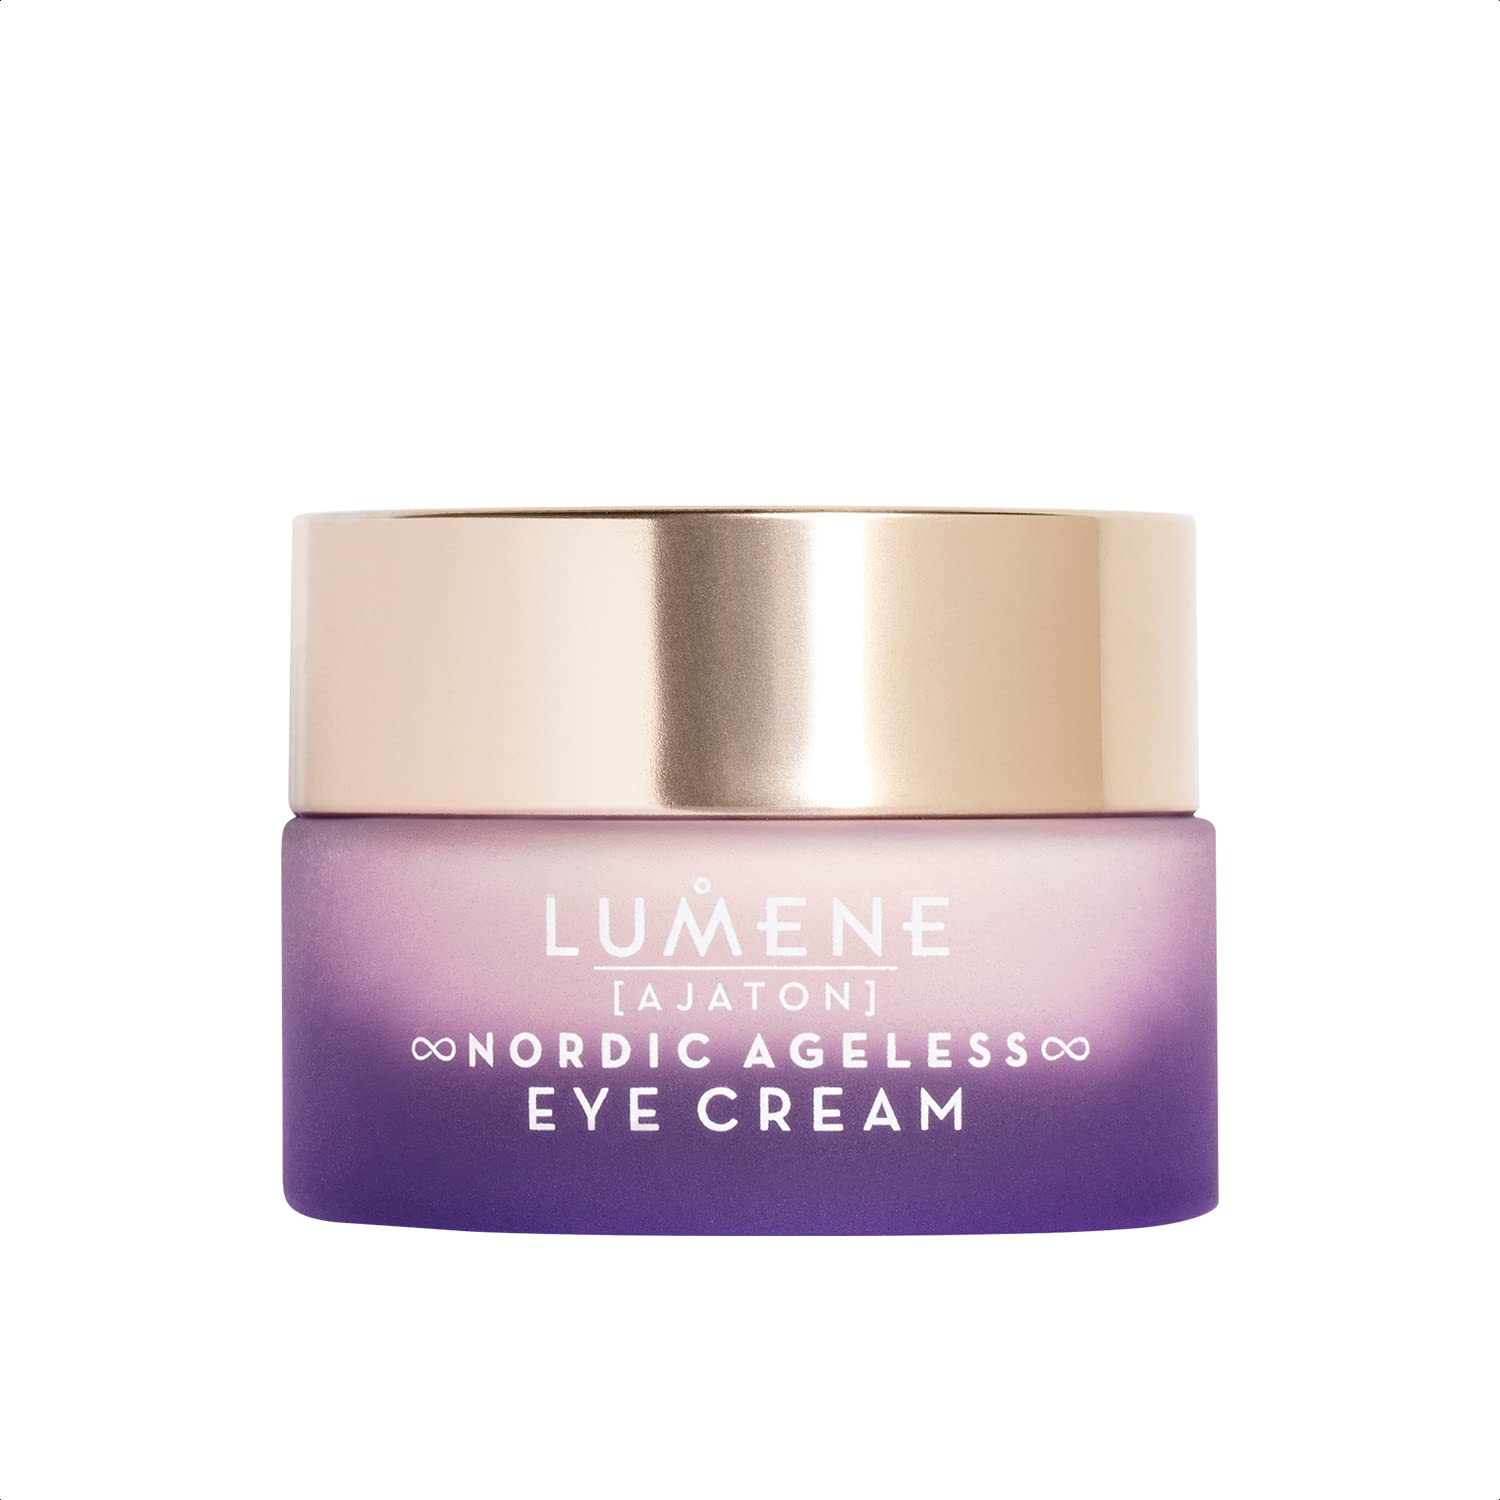 Lumene Ajaton Nordic Ageless Eye Cream - Anti Aging Eye Cream Reduces Fine Lines and Wrinkles - Antioxidant Formula Nurtures & Moisturizes Under Eye Area - Skin Firming Dark Circle Eye Cream (15ml)